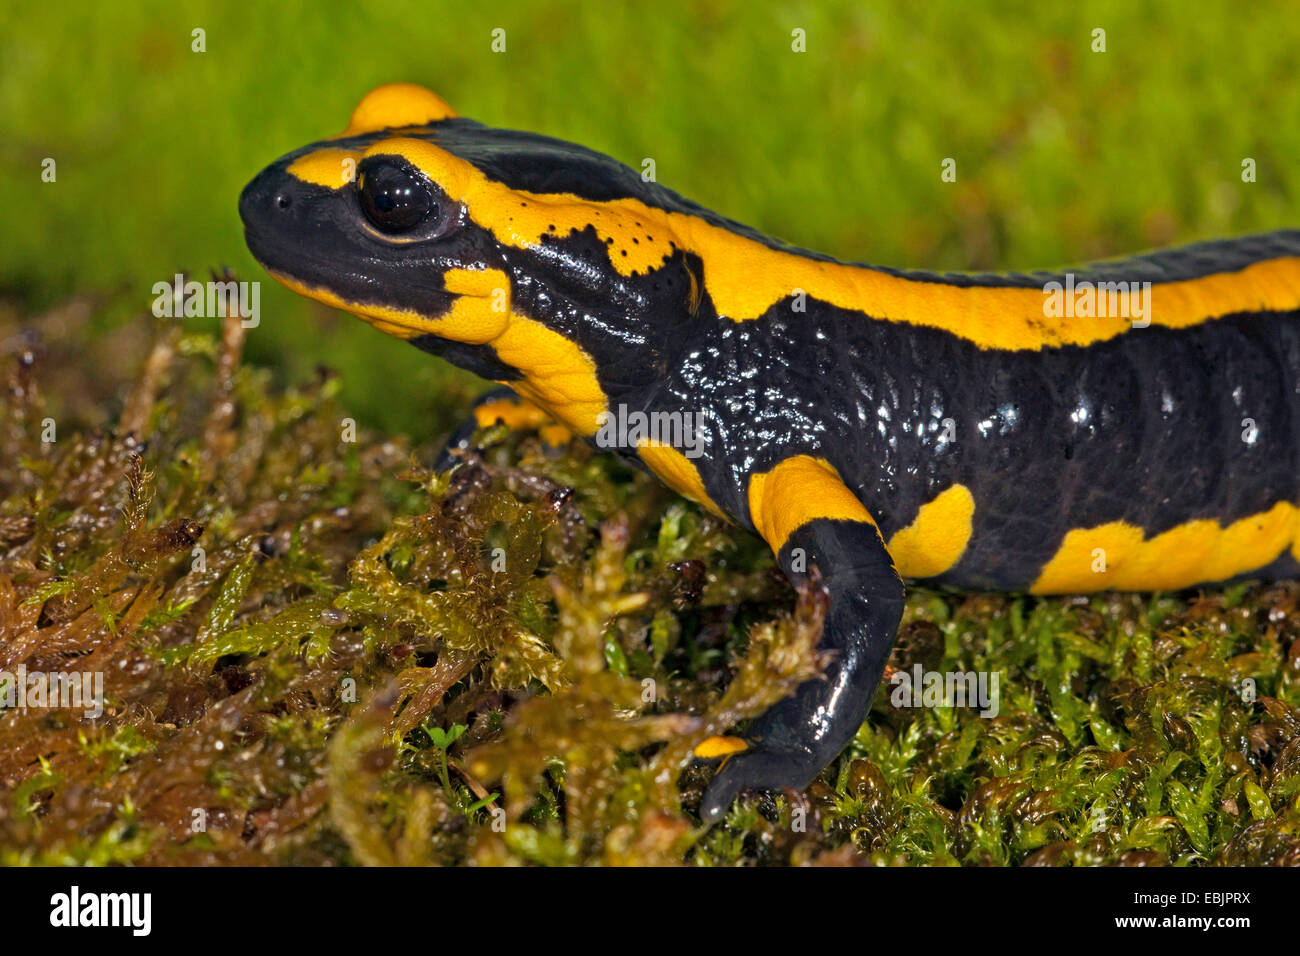 Unione salamandra pezzata (Salamandra salamandra terrestris), ritratto, vista laterale Foto Stock